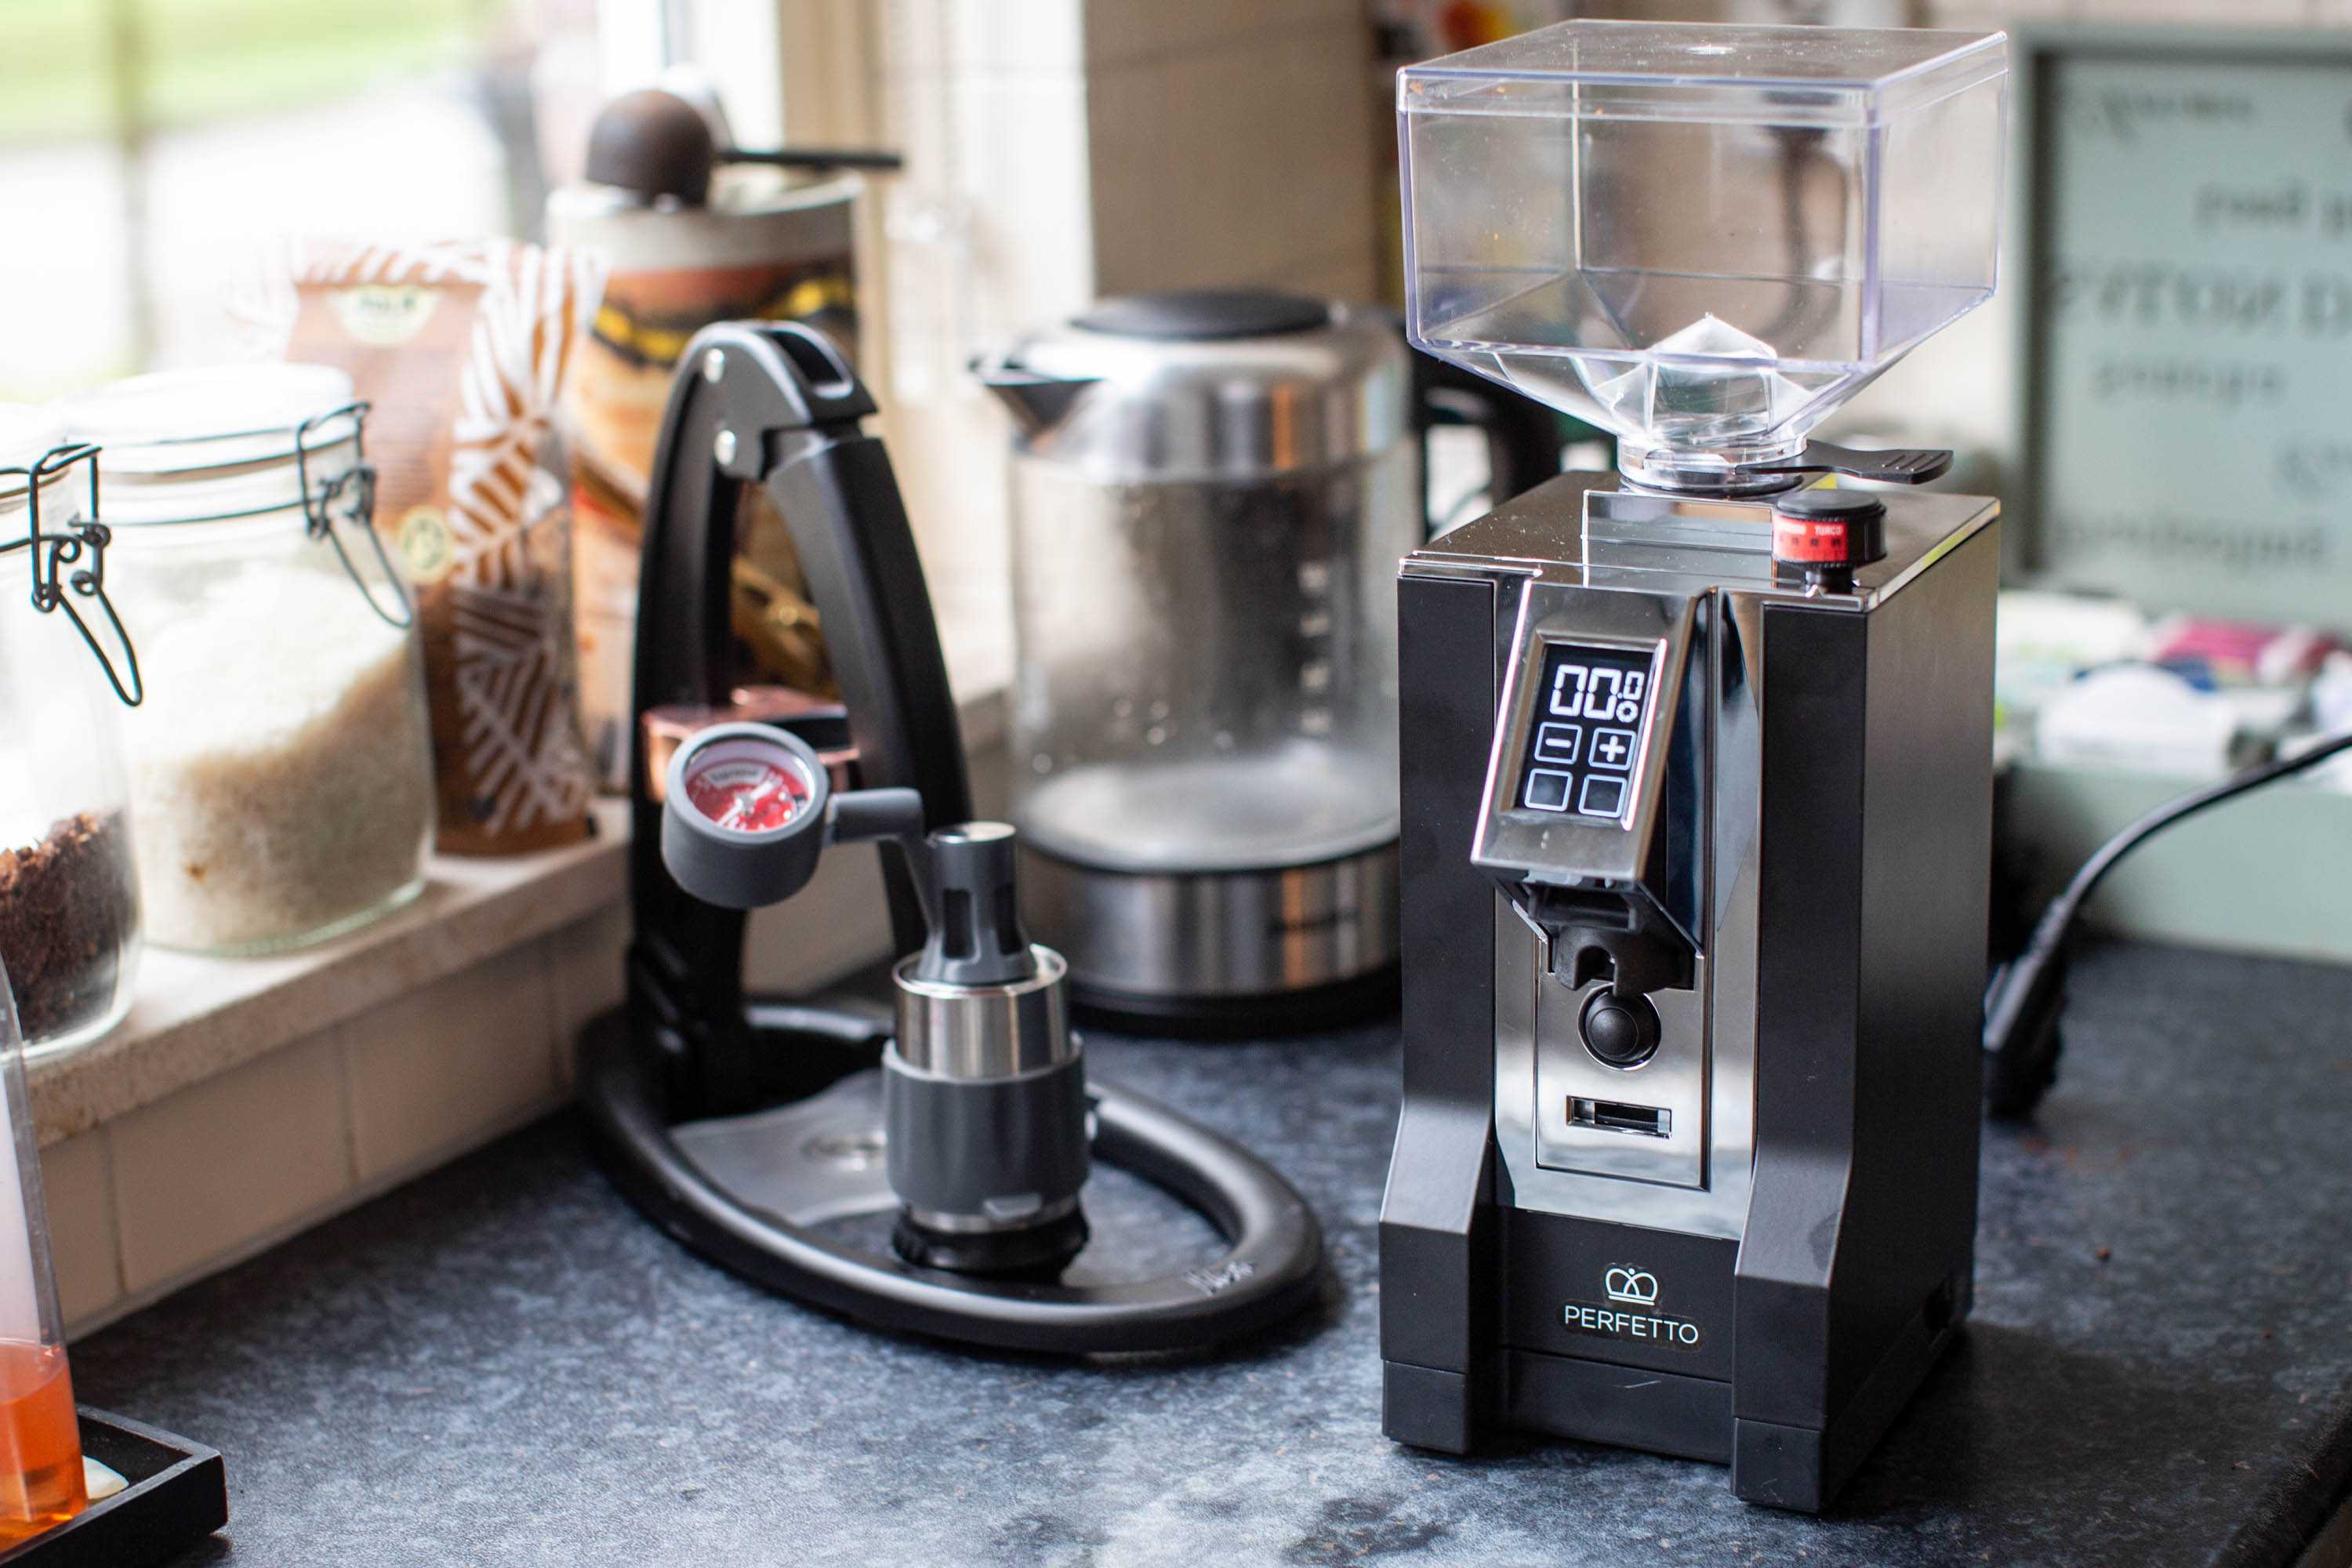 Eureka Mignon Perfetto coffee grinder first impressions | Snoffeecob